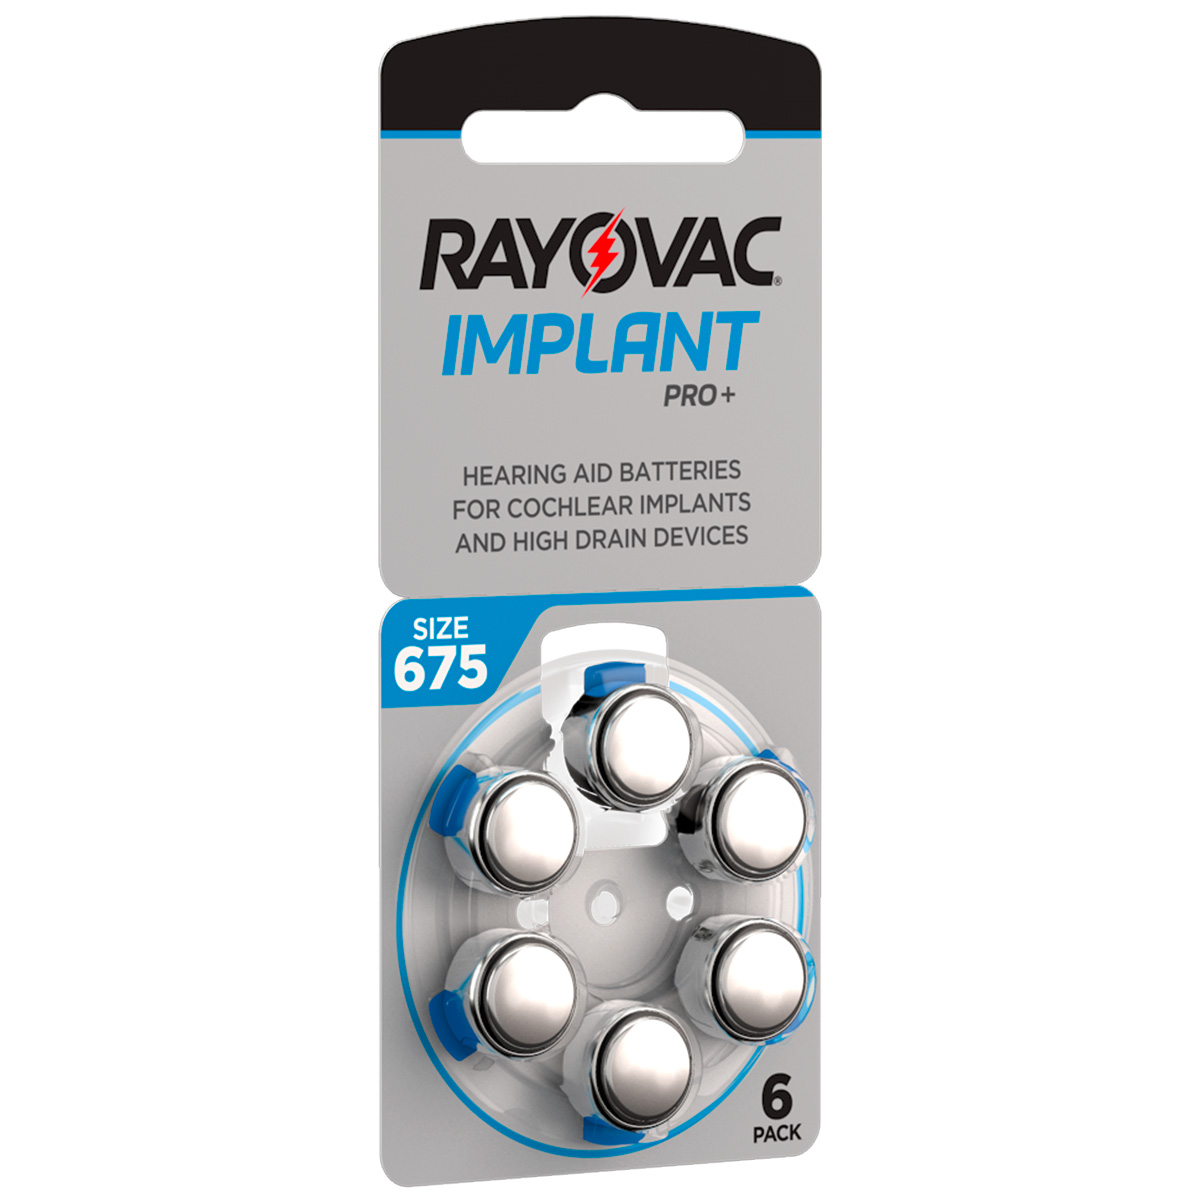 Rayovac Implant Pro+, 6 Hörgerätebatterien Nr. 675 für Cochlear Implantate, Blister